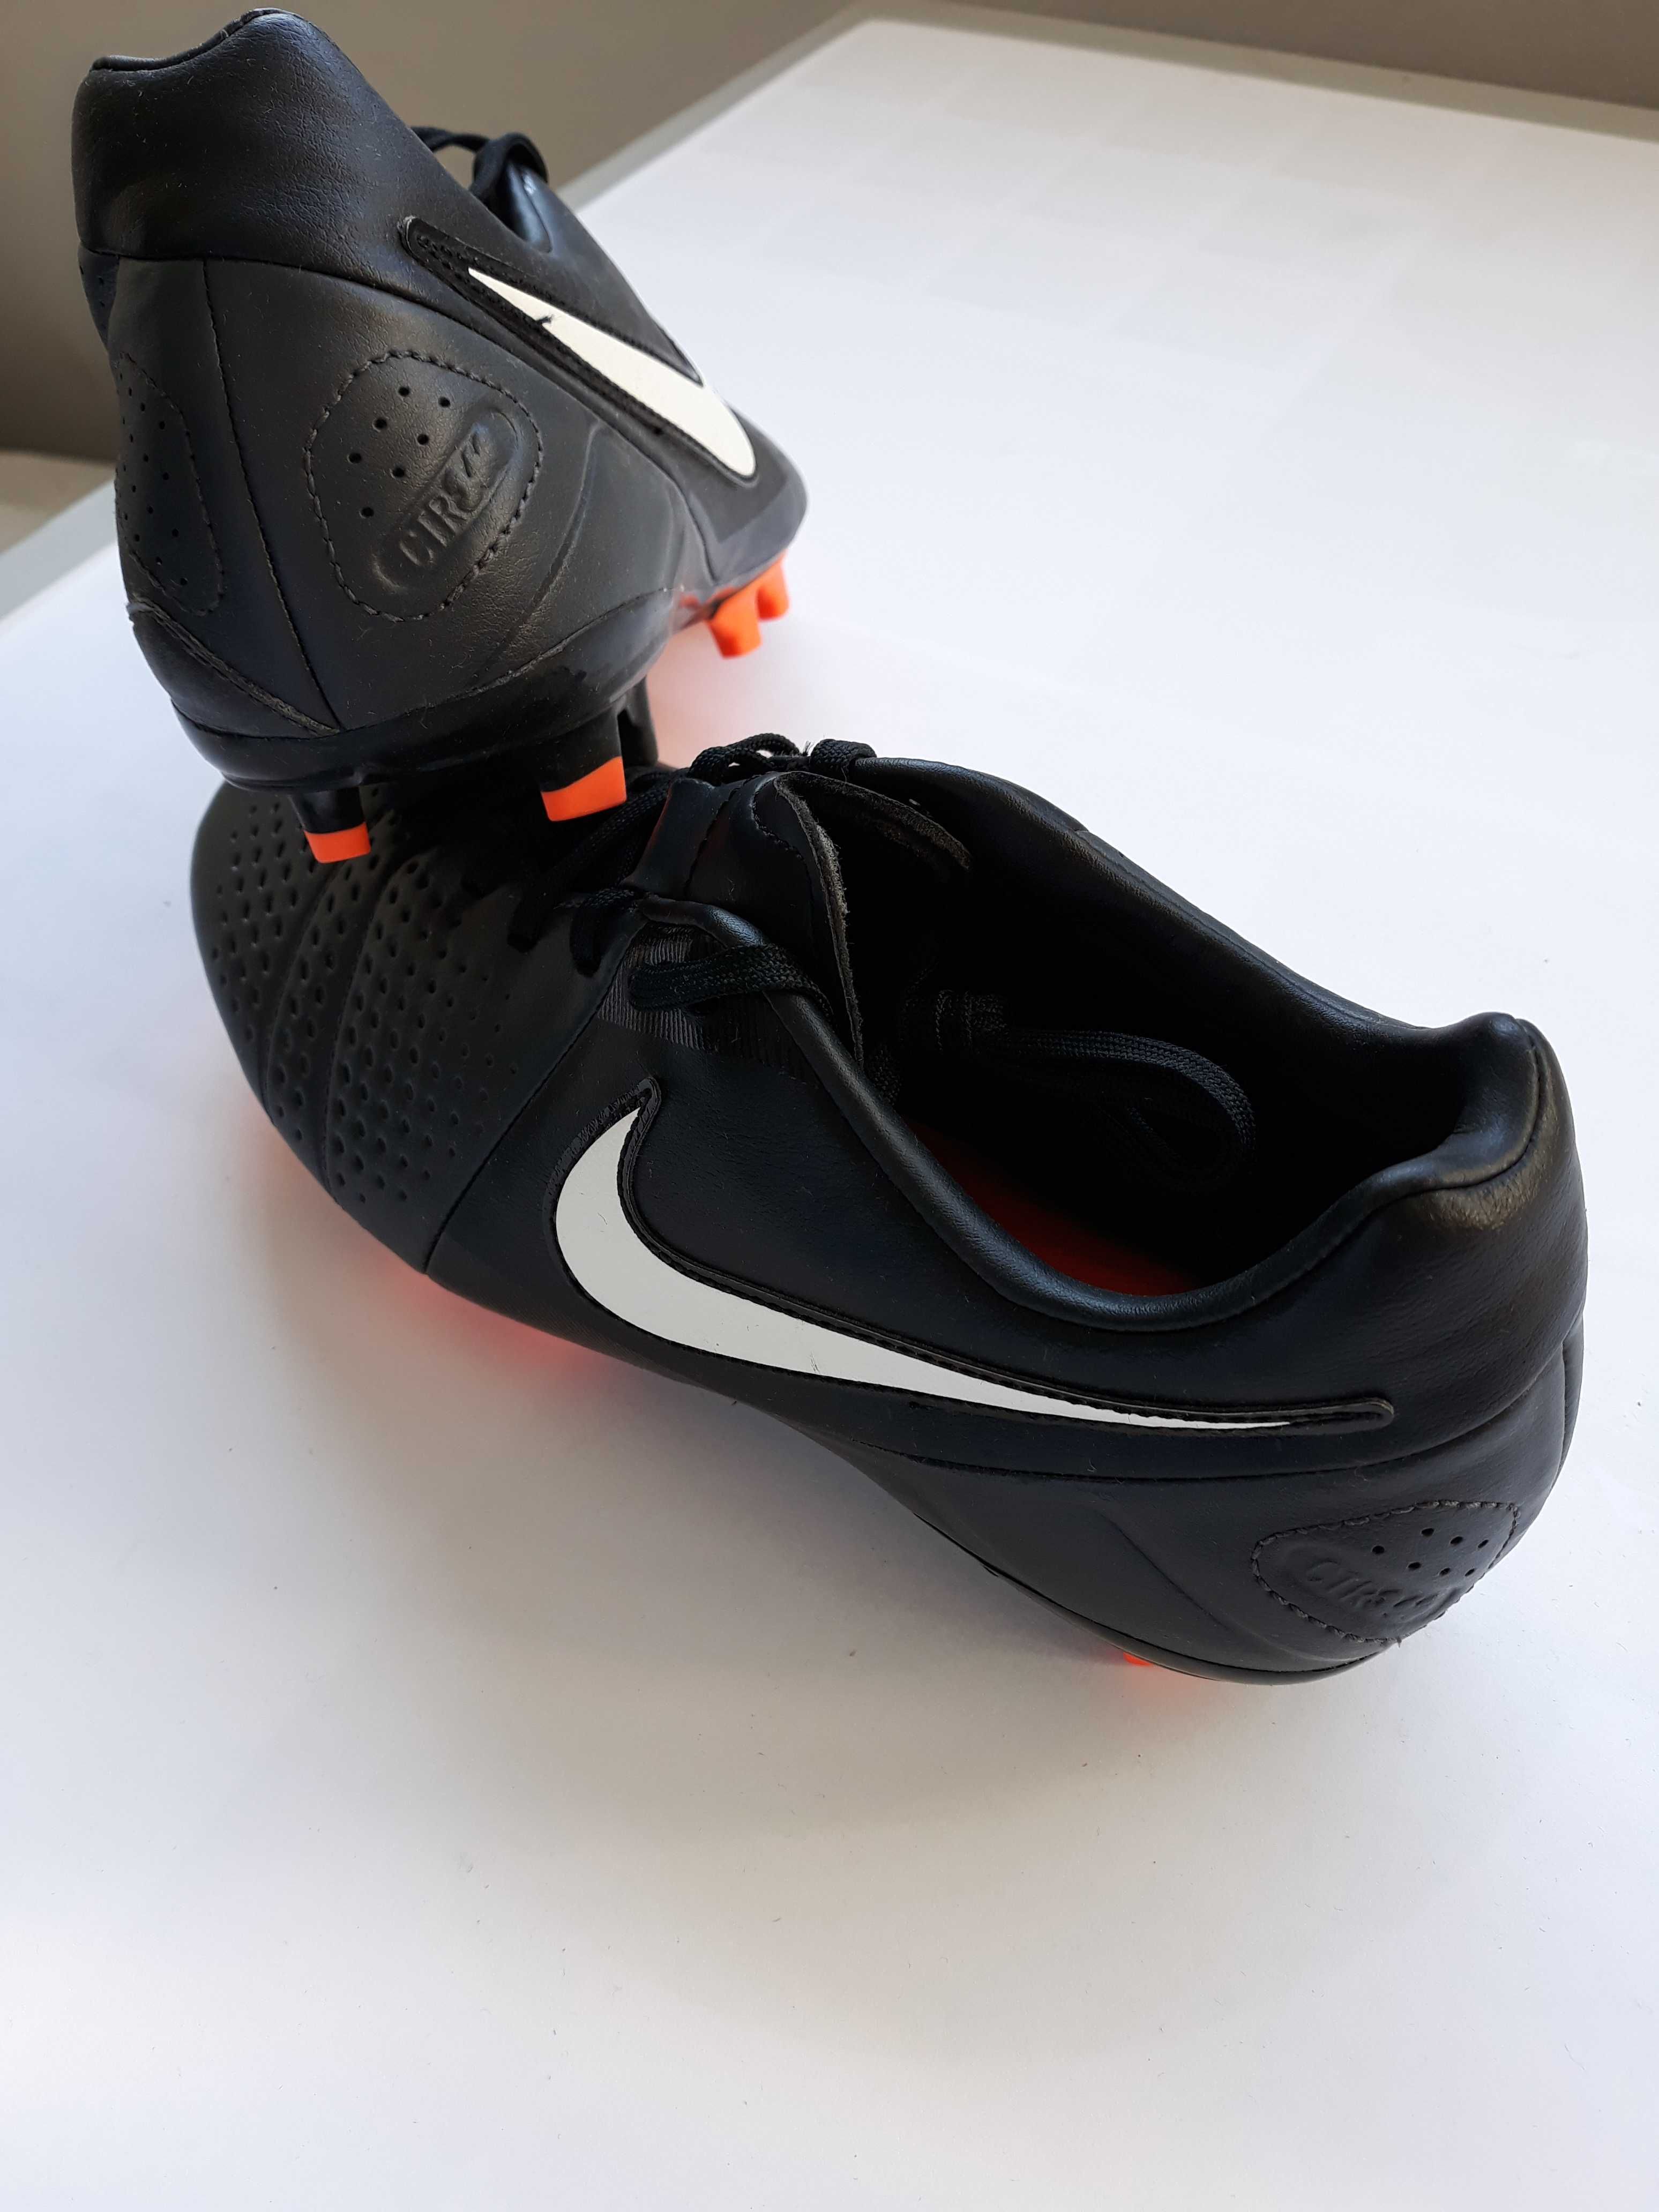 Chuteiras Futebol Nike CTR360 Libretto III FG - n.º 39 e 44